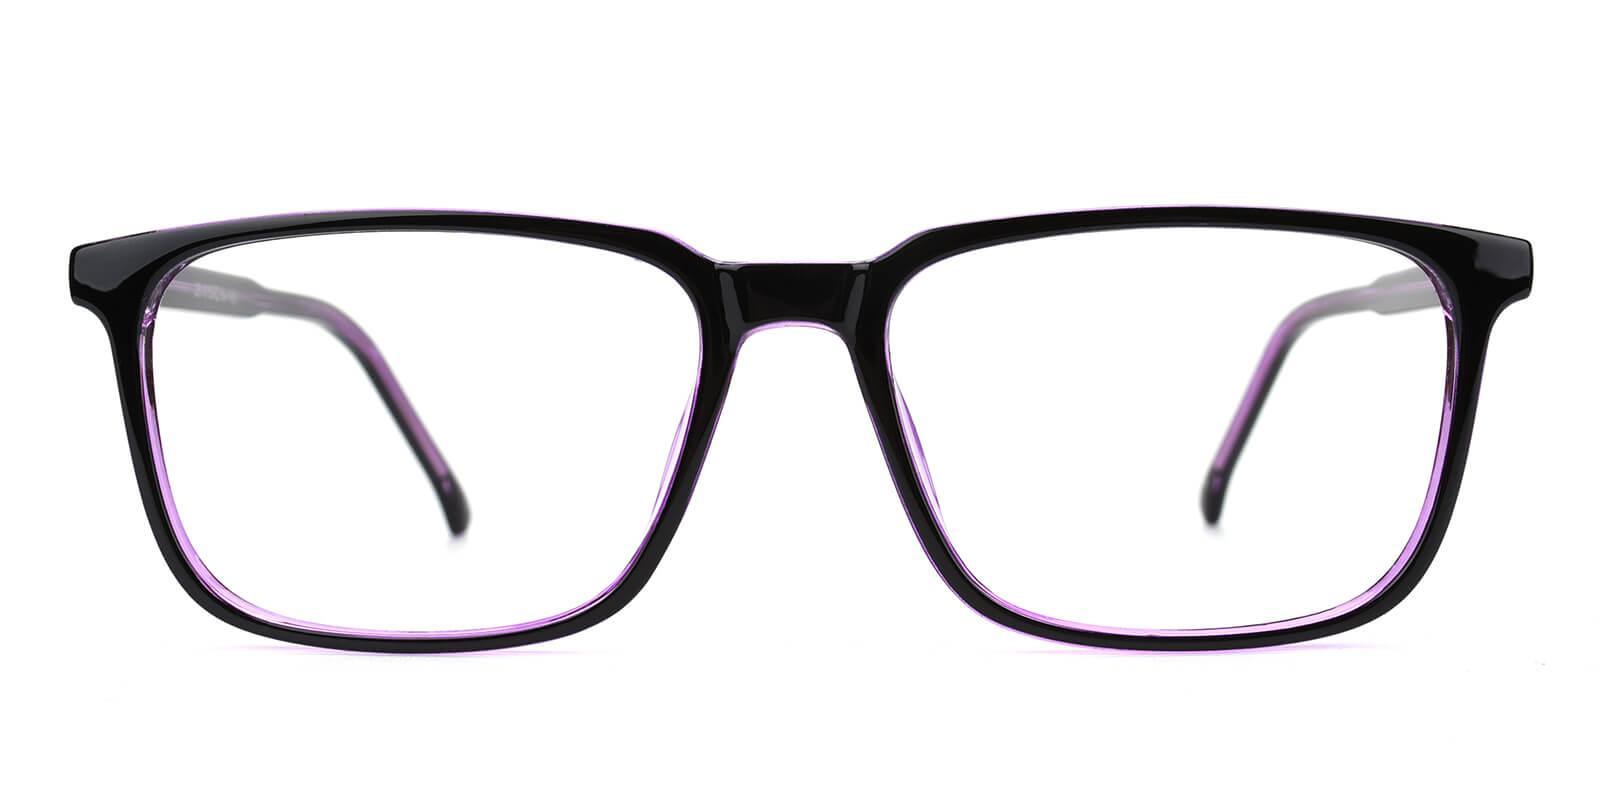 Belleville Purple Acetate Eyeglasses , UniversalBridgeFit Frames from ABBE Glasses